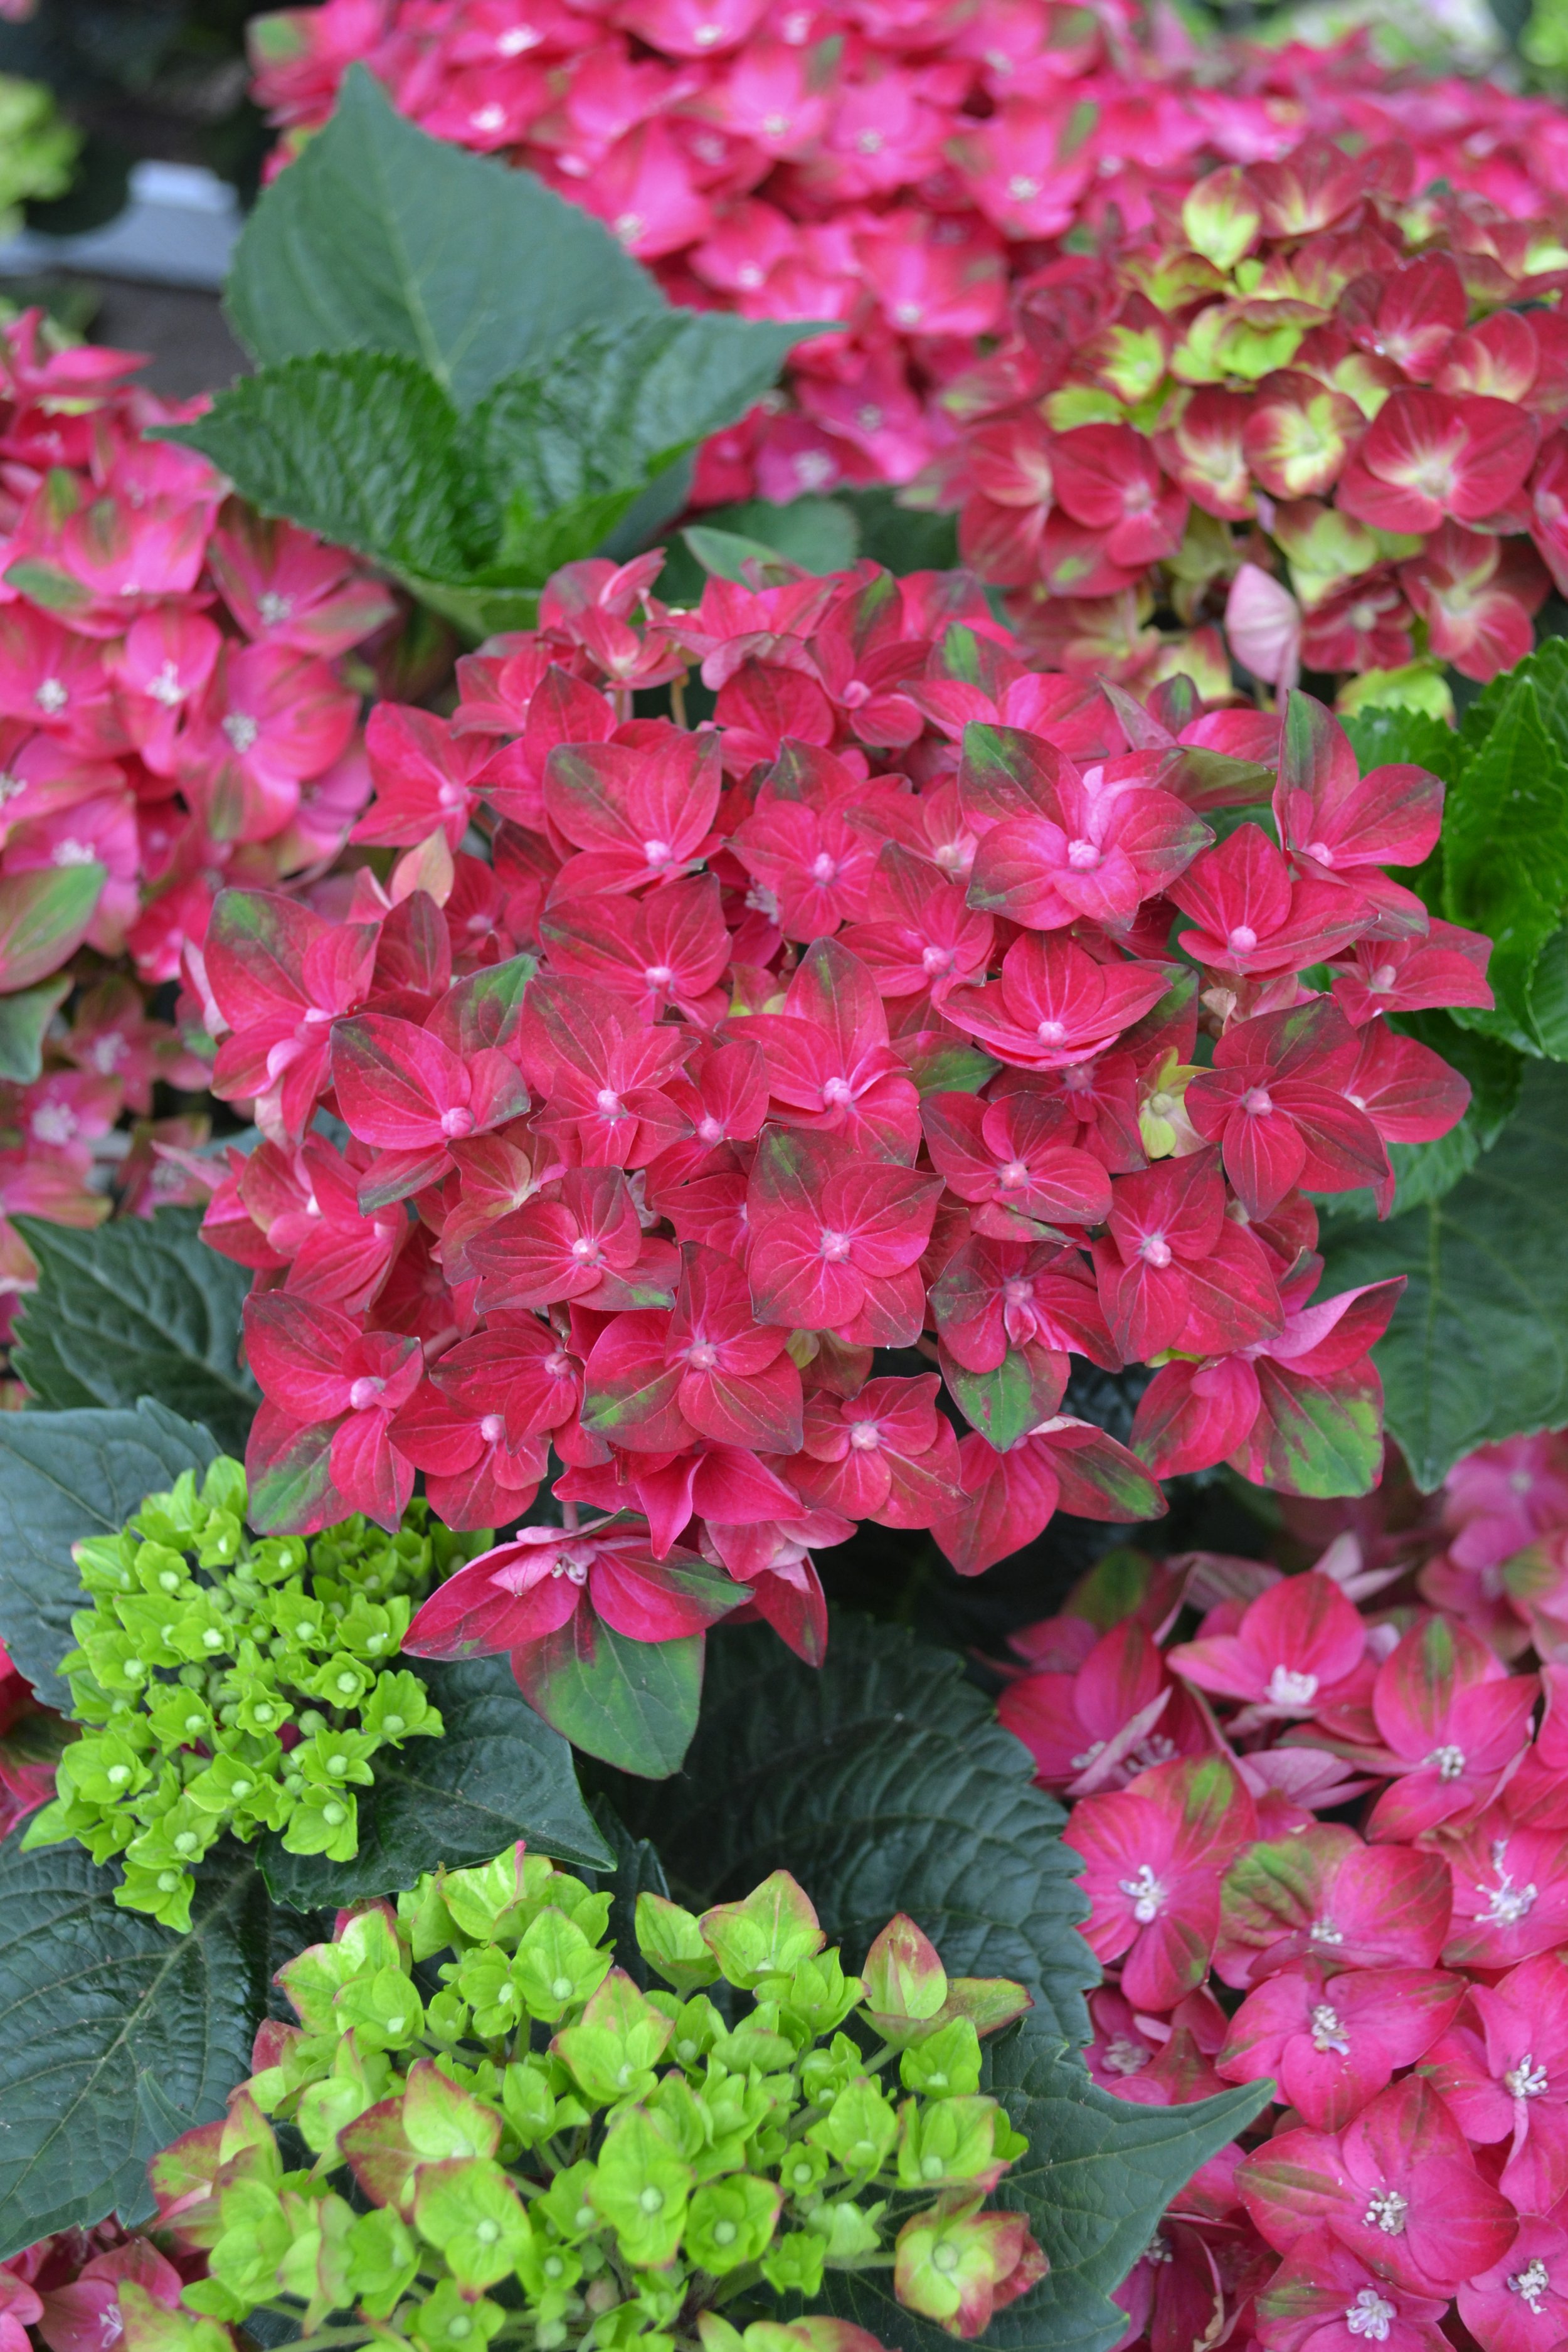 Image of Hydrangea rosso glory flower